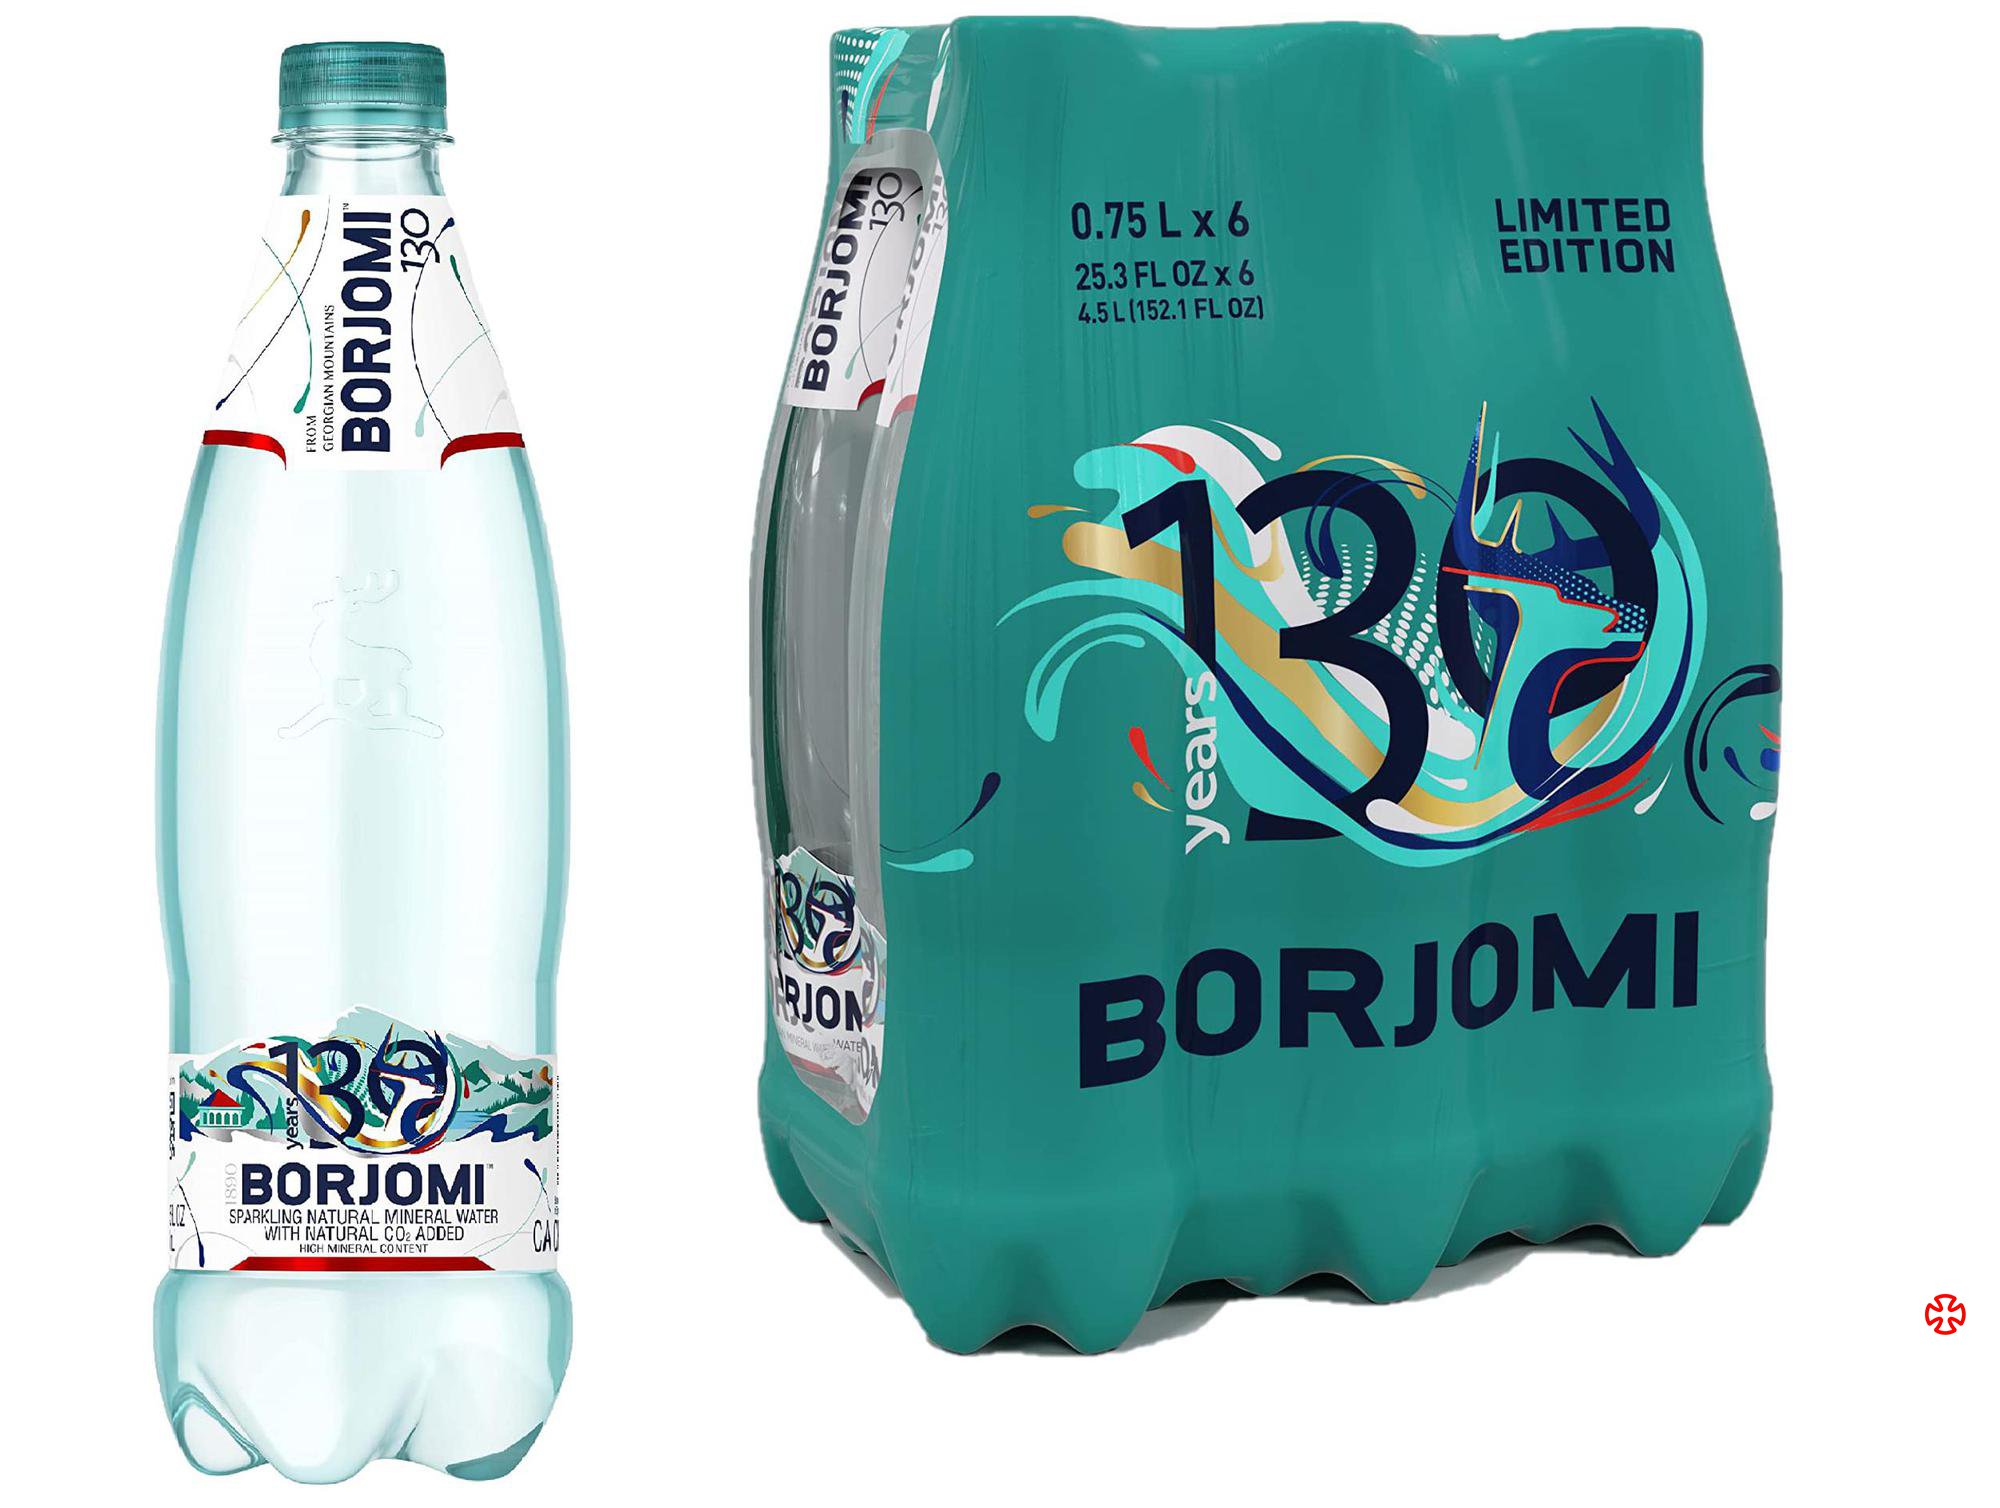 Bottles of Borjomi Mineral Water